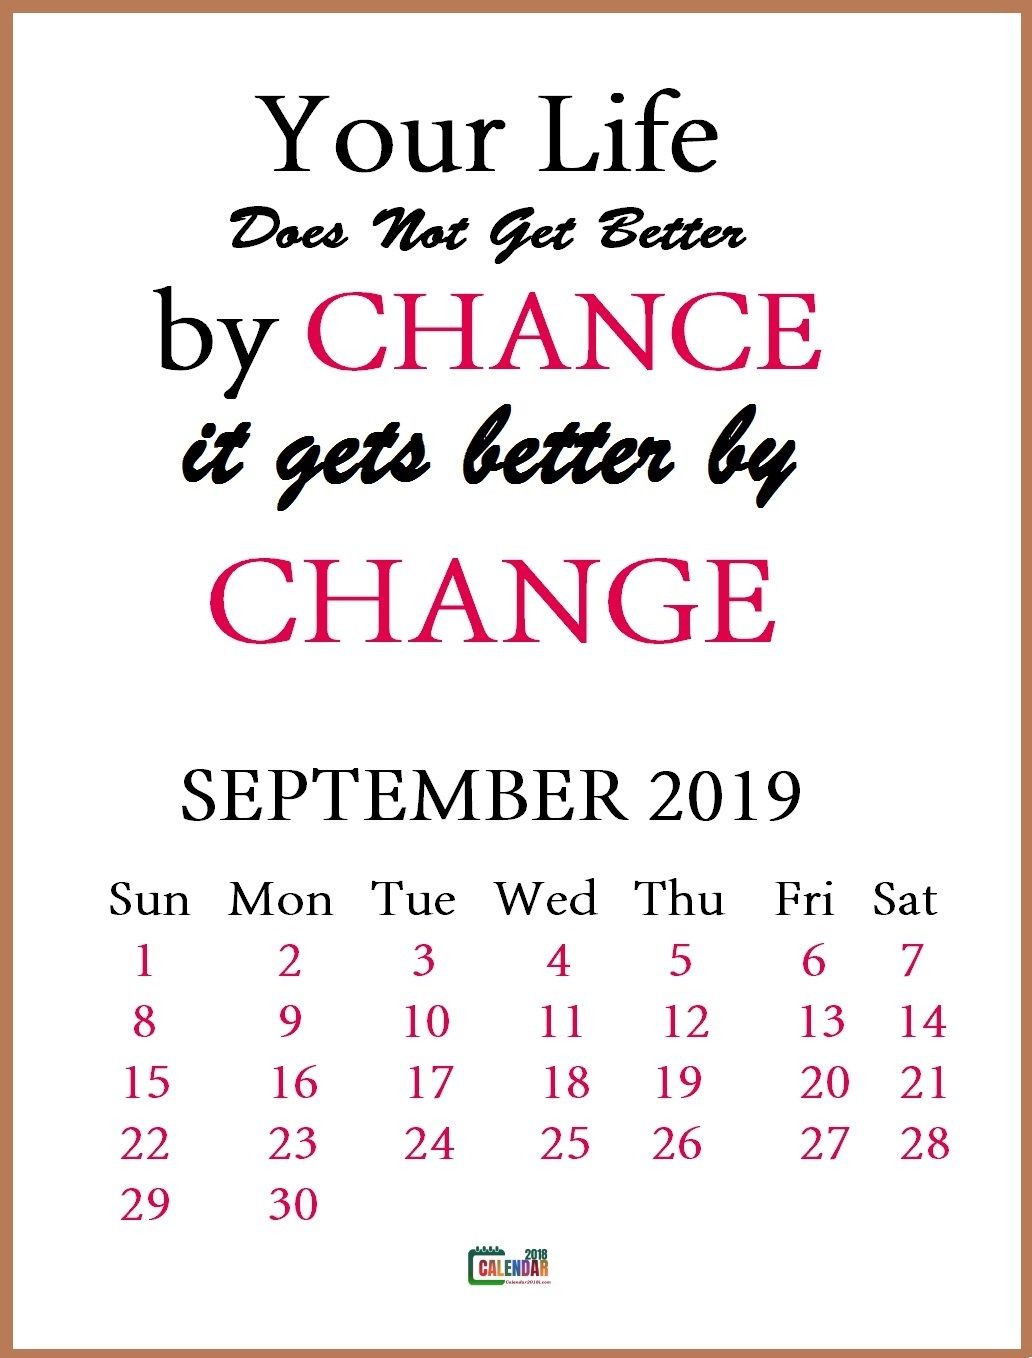 September Quotes Inspirational
 September 2019 Motivational Quotes Calendar